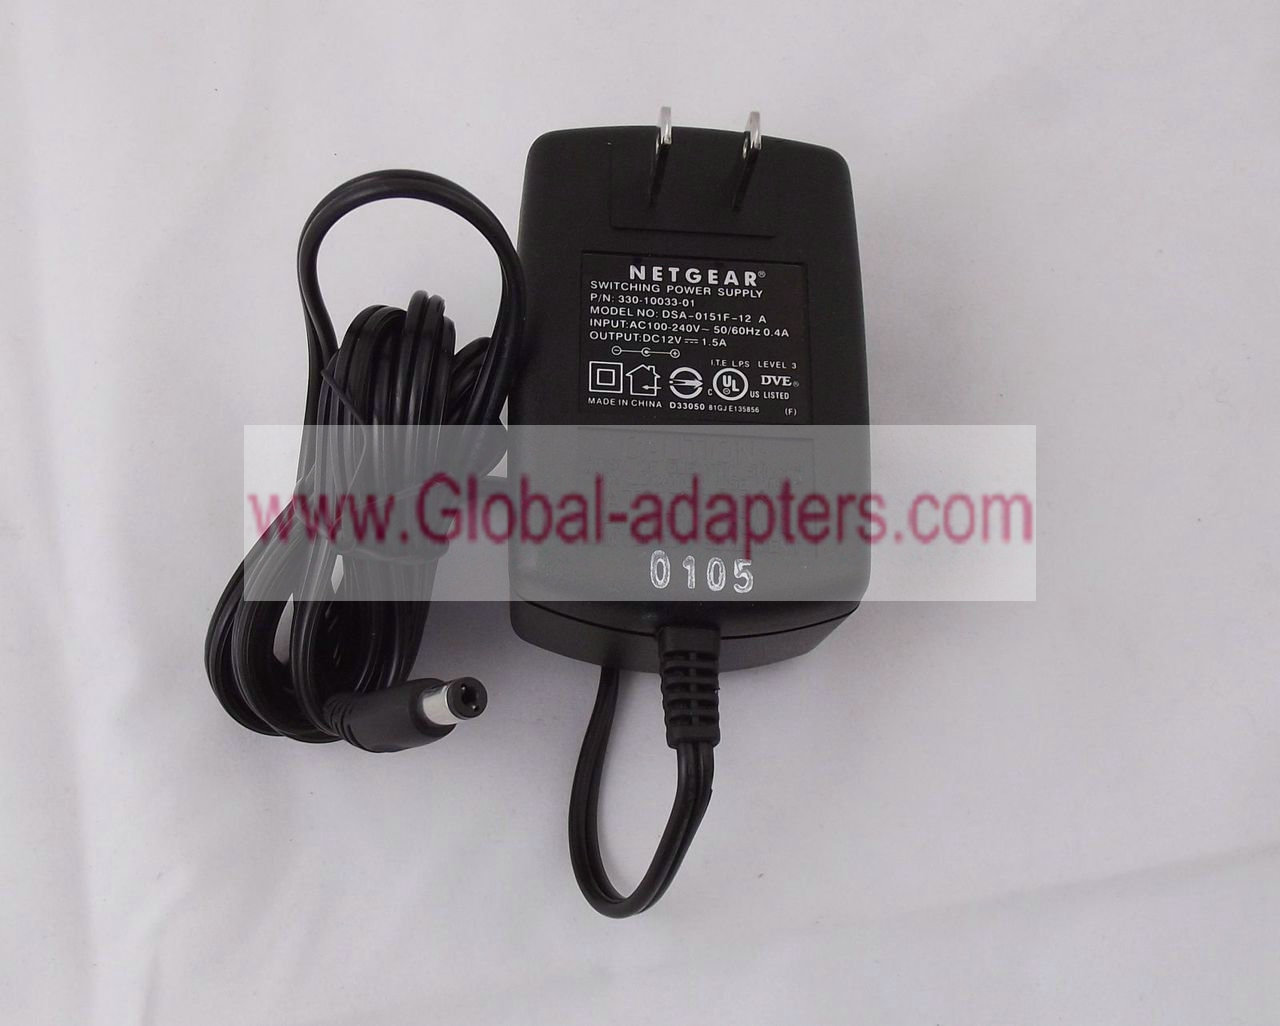 NETGEAR DSA-0151F-12 A 330-10033-01 Power Adapter 12V 1.5A 4.0mm x 1.7mm